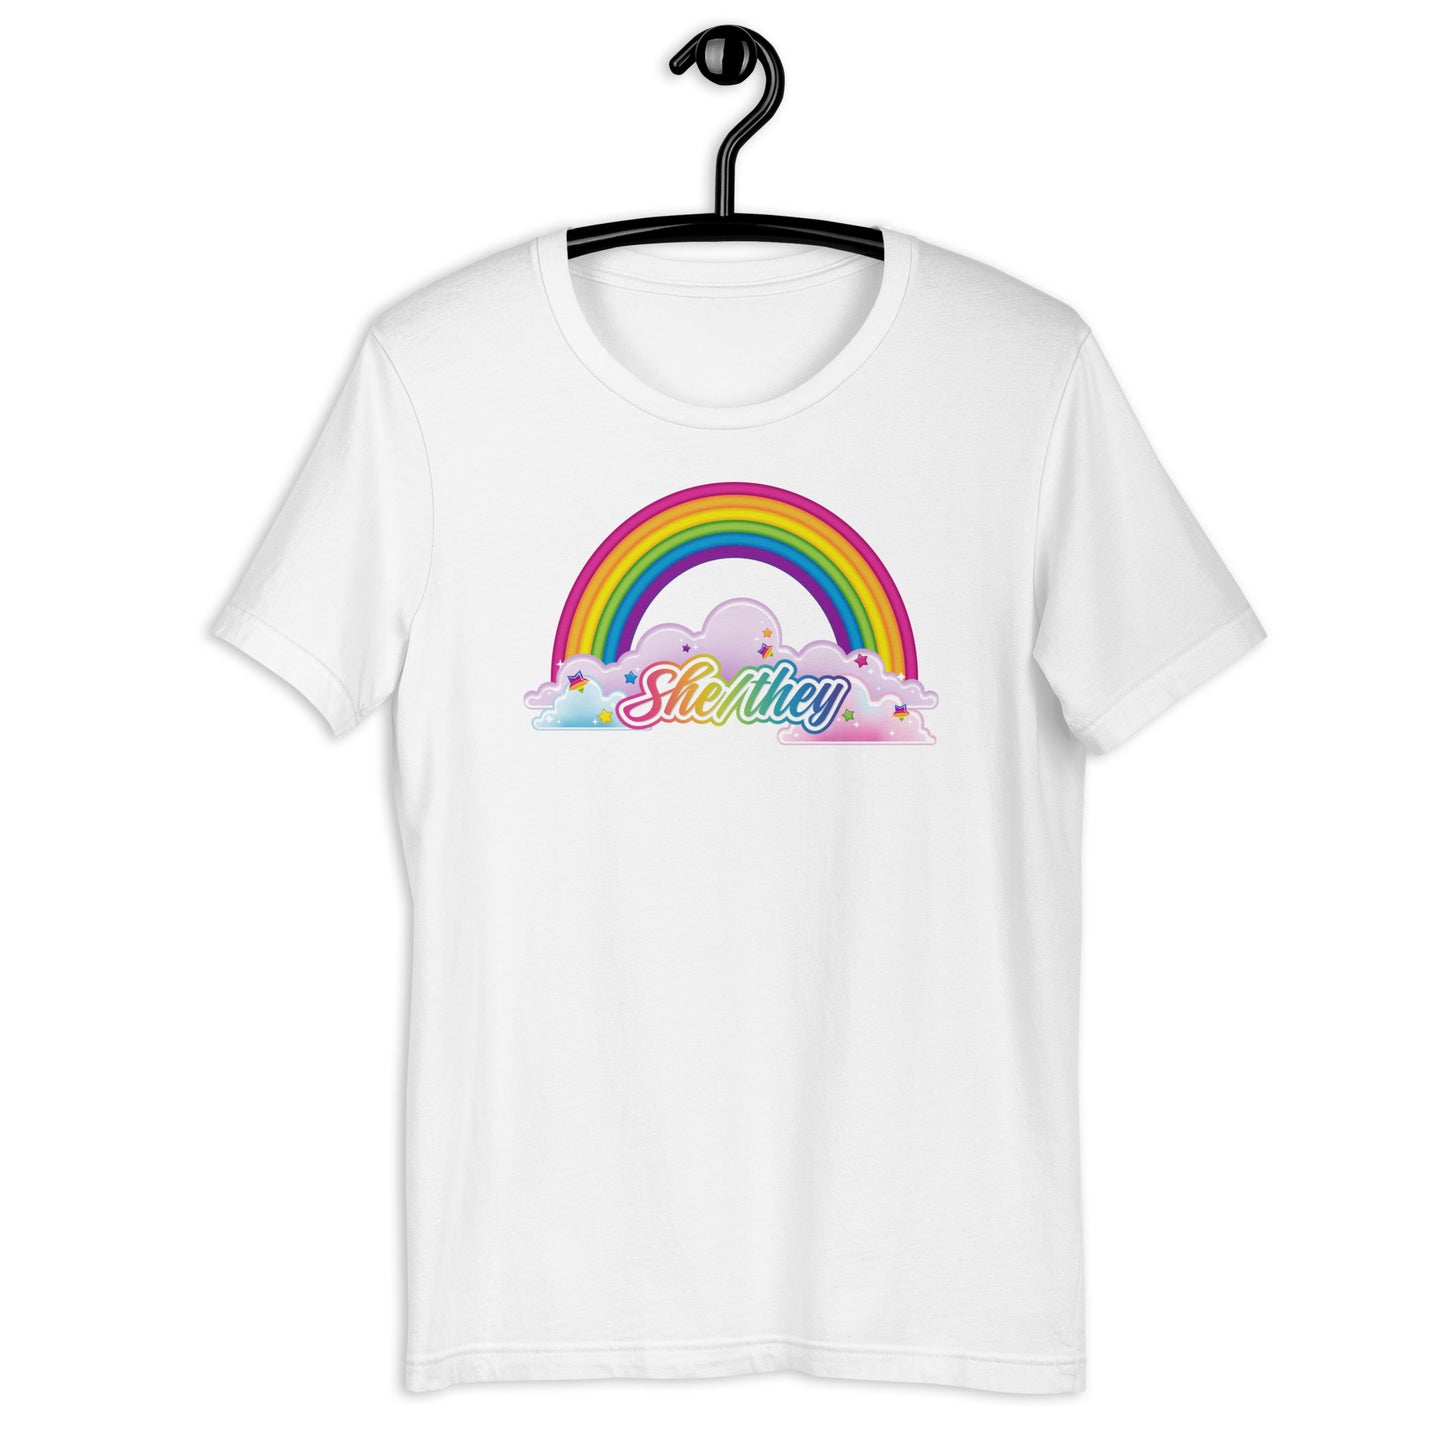 LGBTQIA Frank T-Shirt: She/They Pronouns